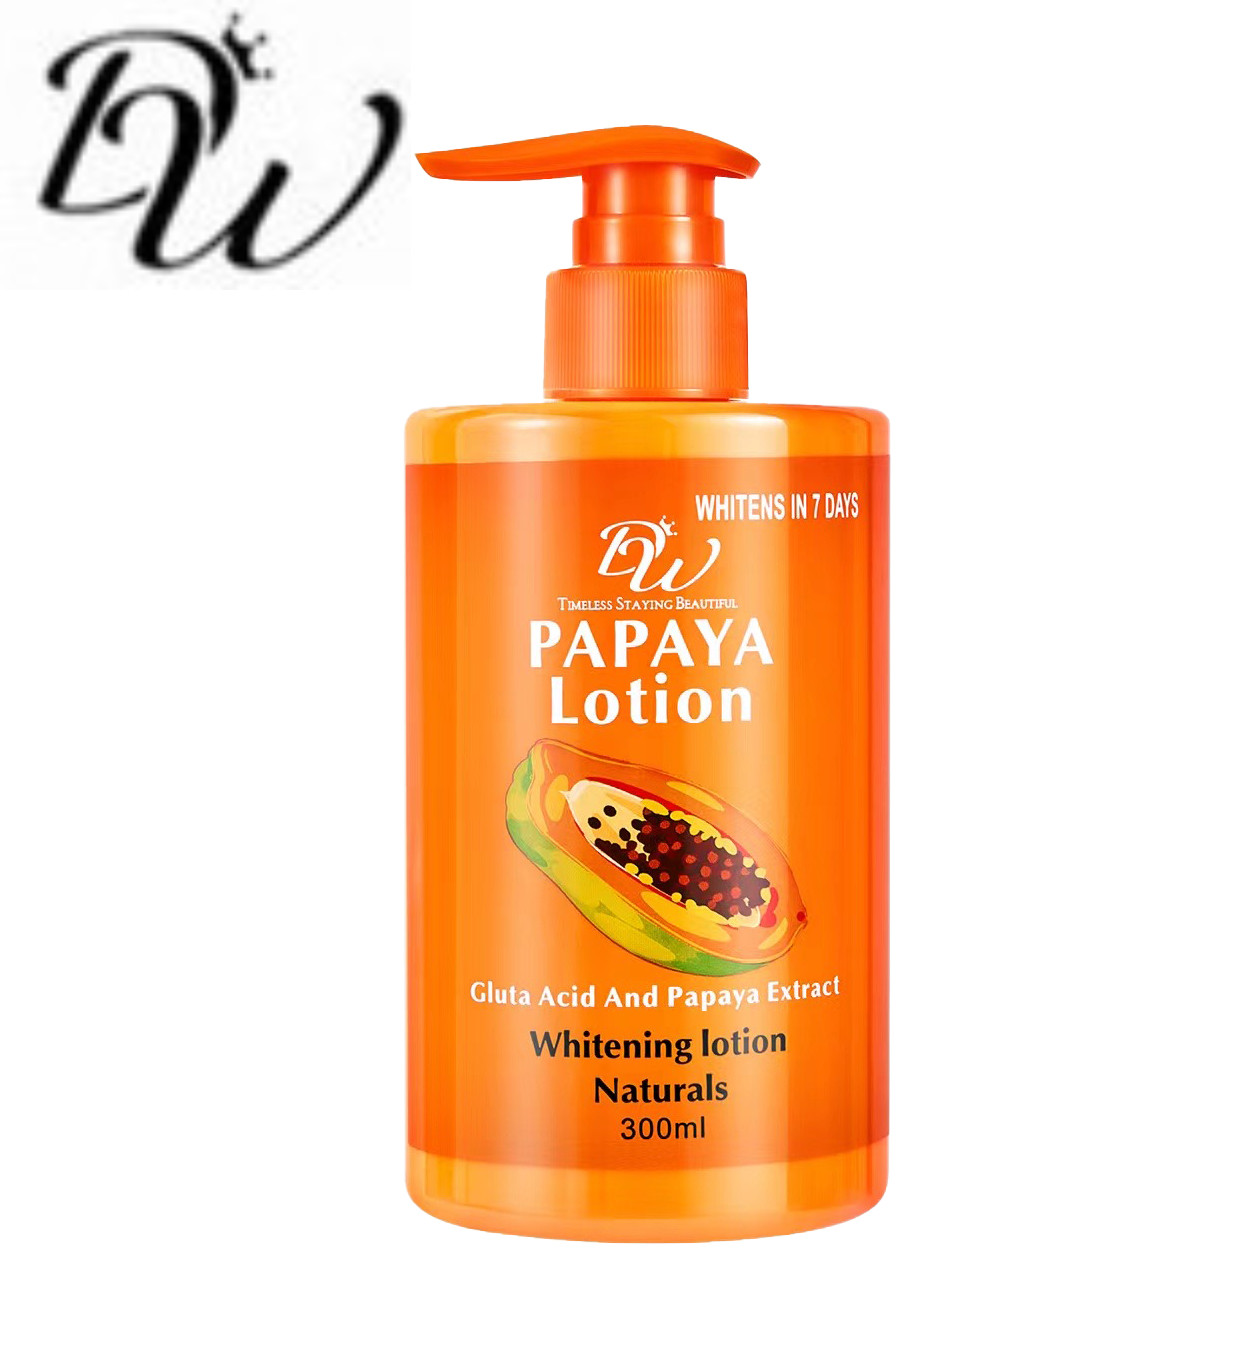 DW Whitens In 7 Days Papaya Lotion Gluta Acid And Papaya Extract ...